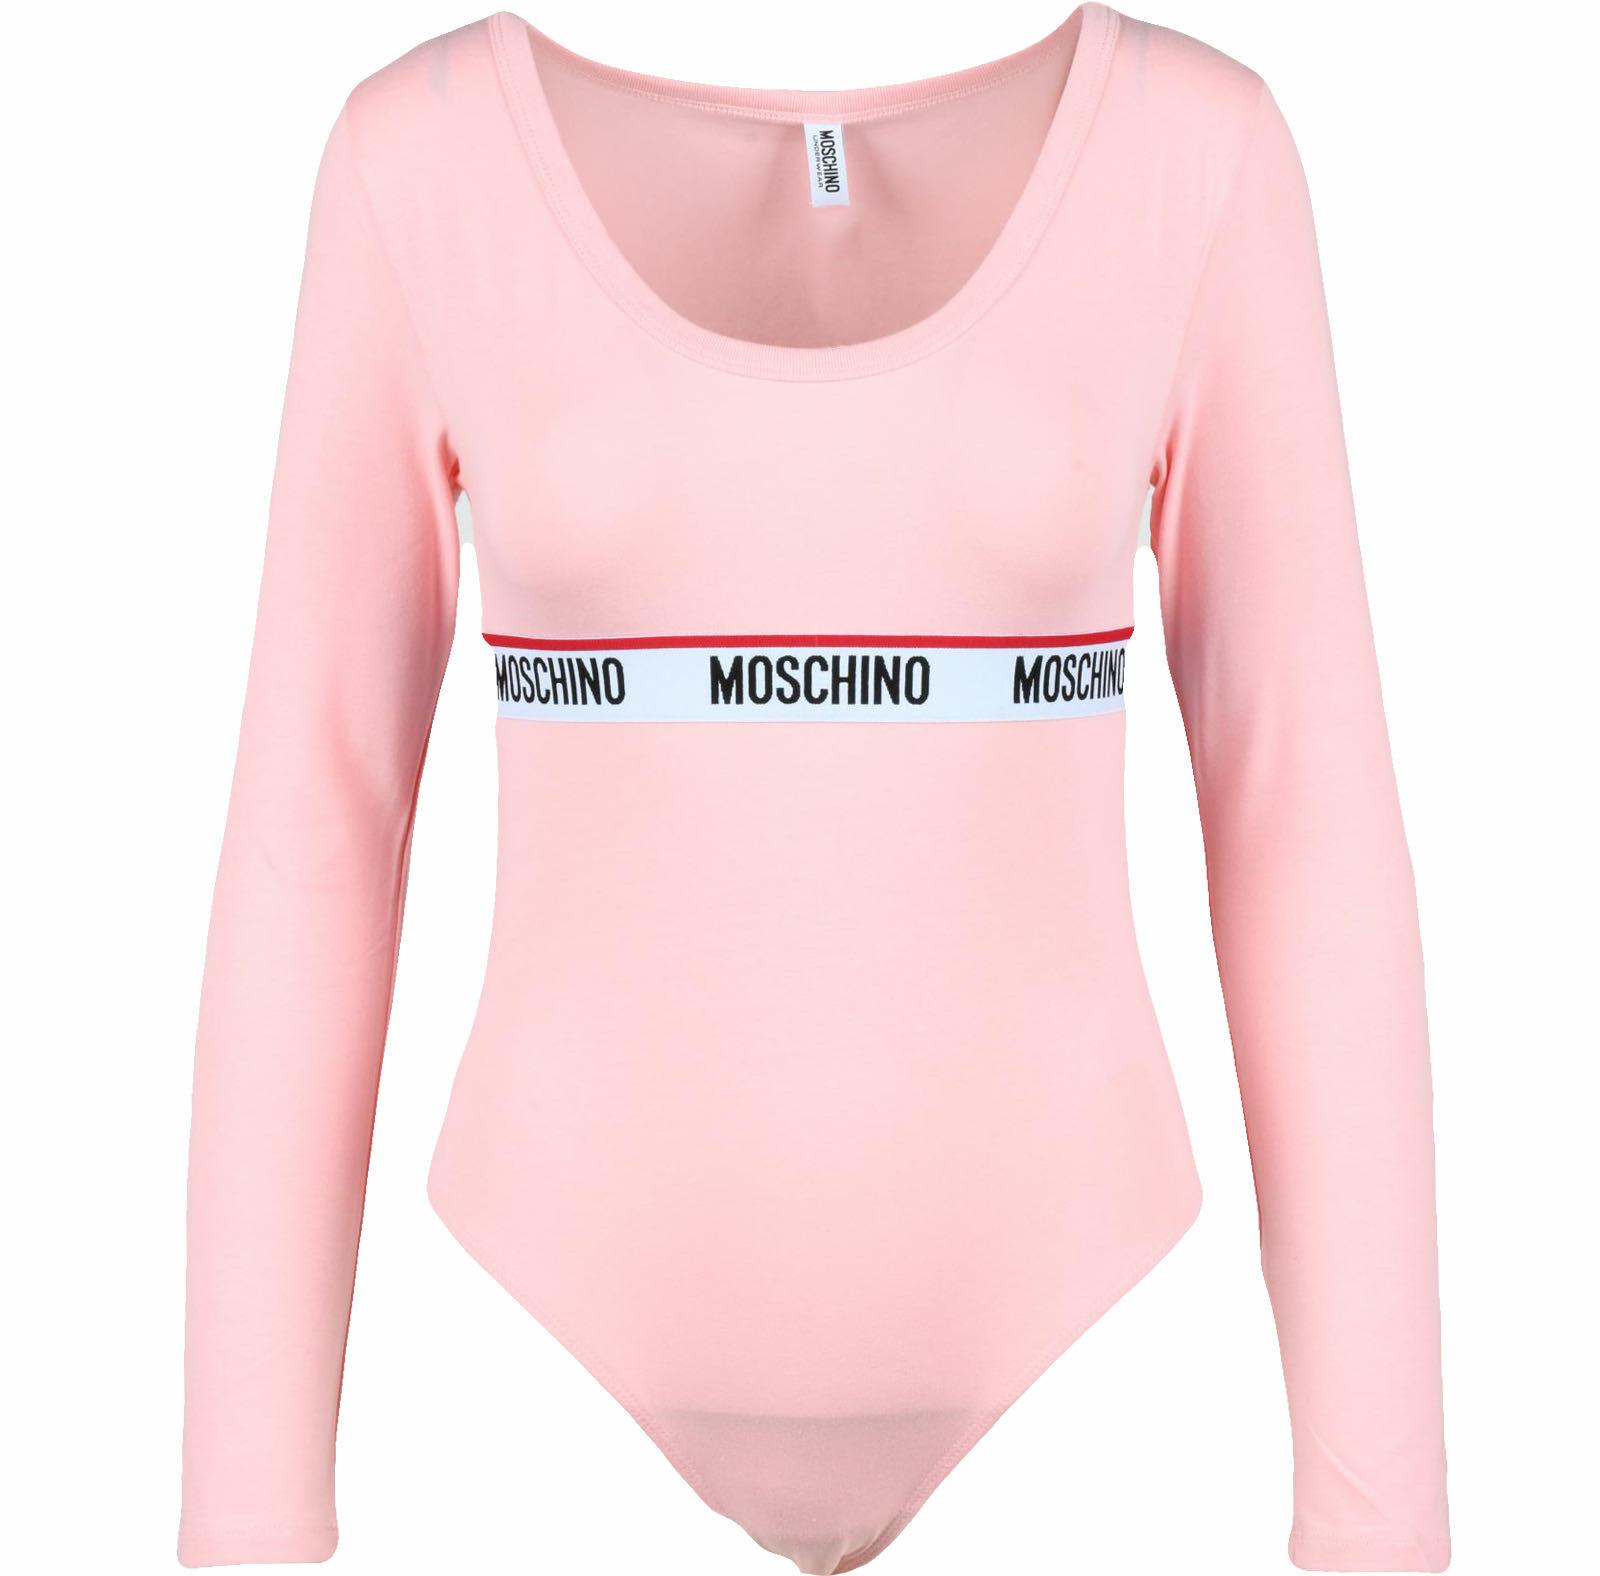 Moschino Underwear Women's Pink Body XS at FORZIERI